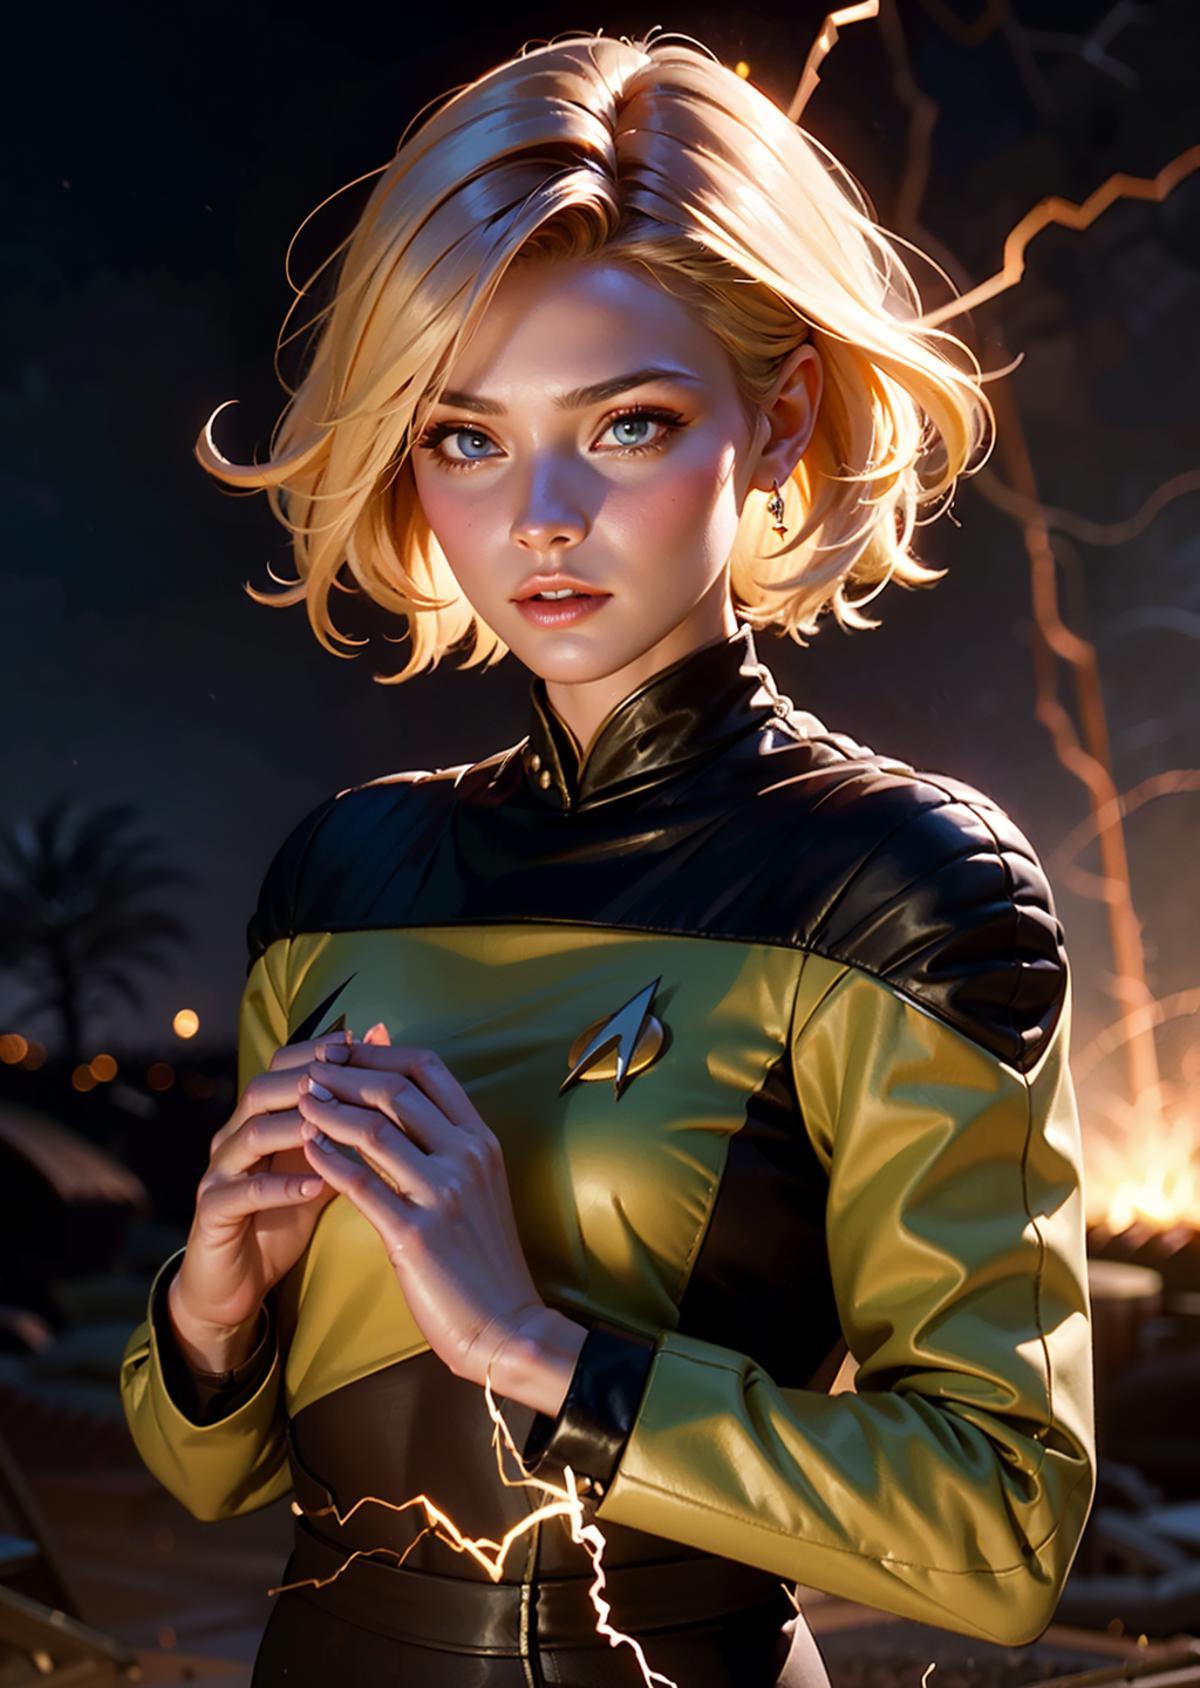 A digital art rendering of a woman in a yellow shirt with a Starfleet emblem on it.